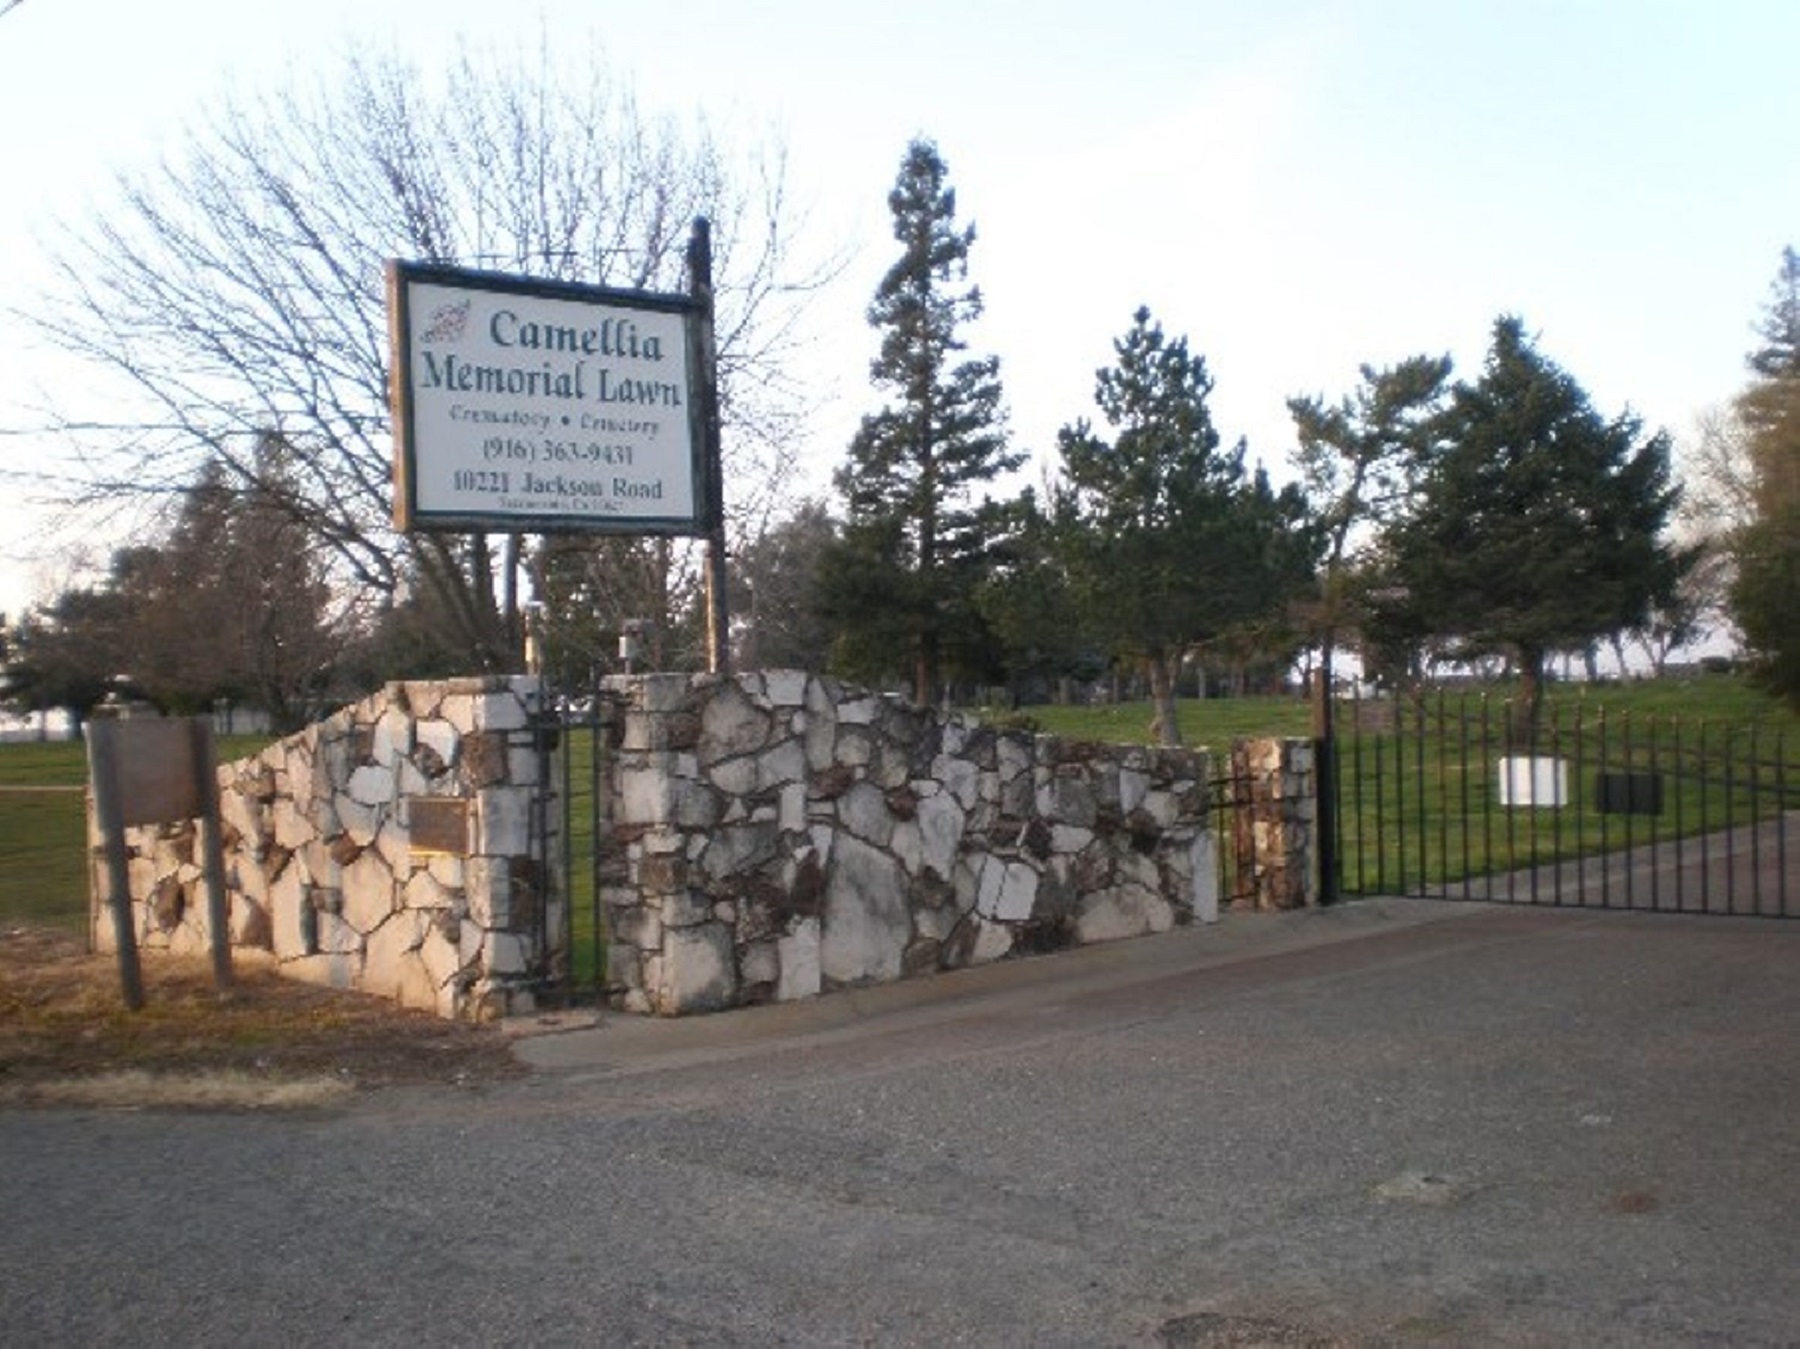 Camellia Memorial Lawn Cemetery